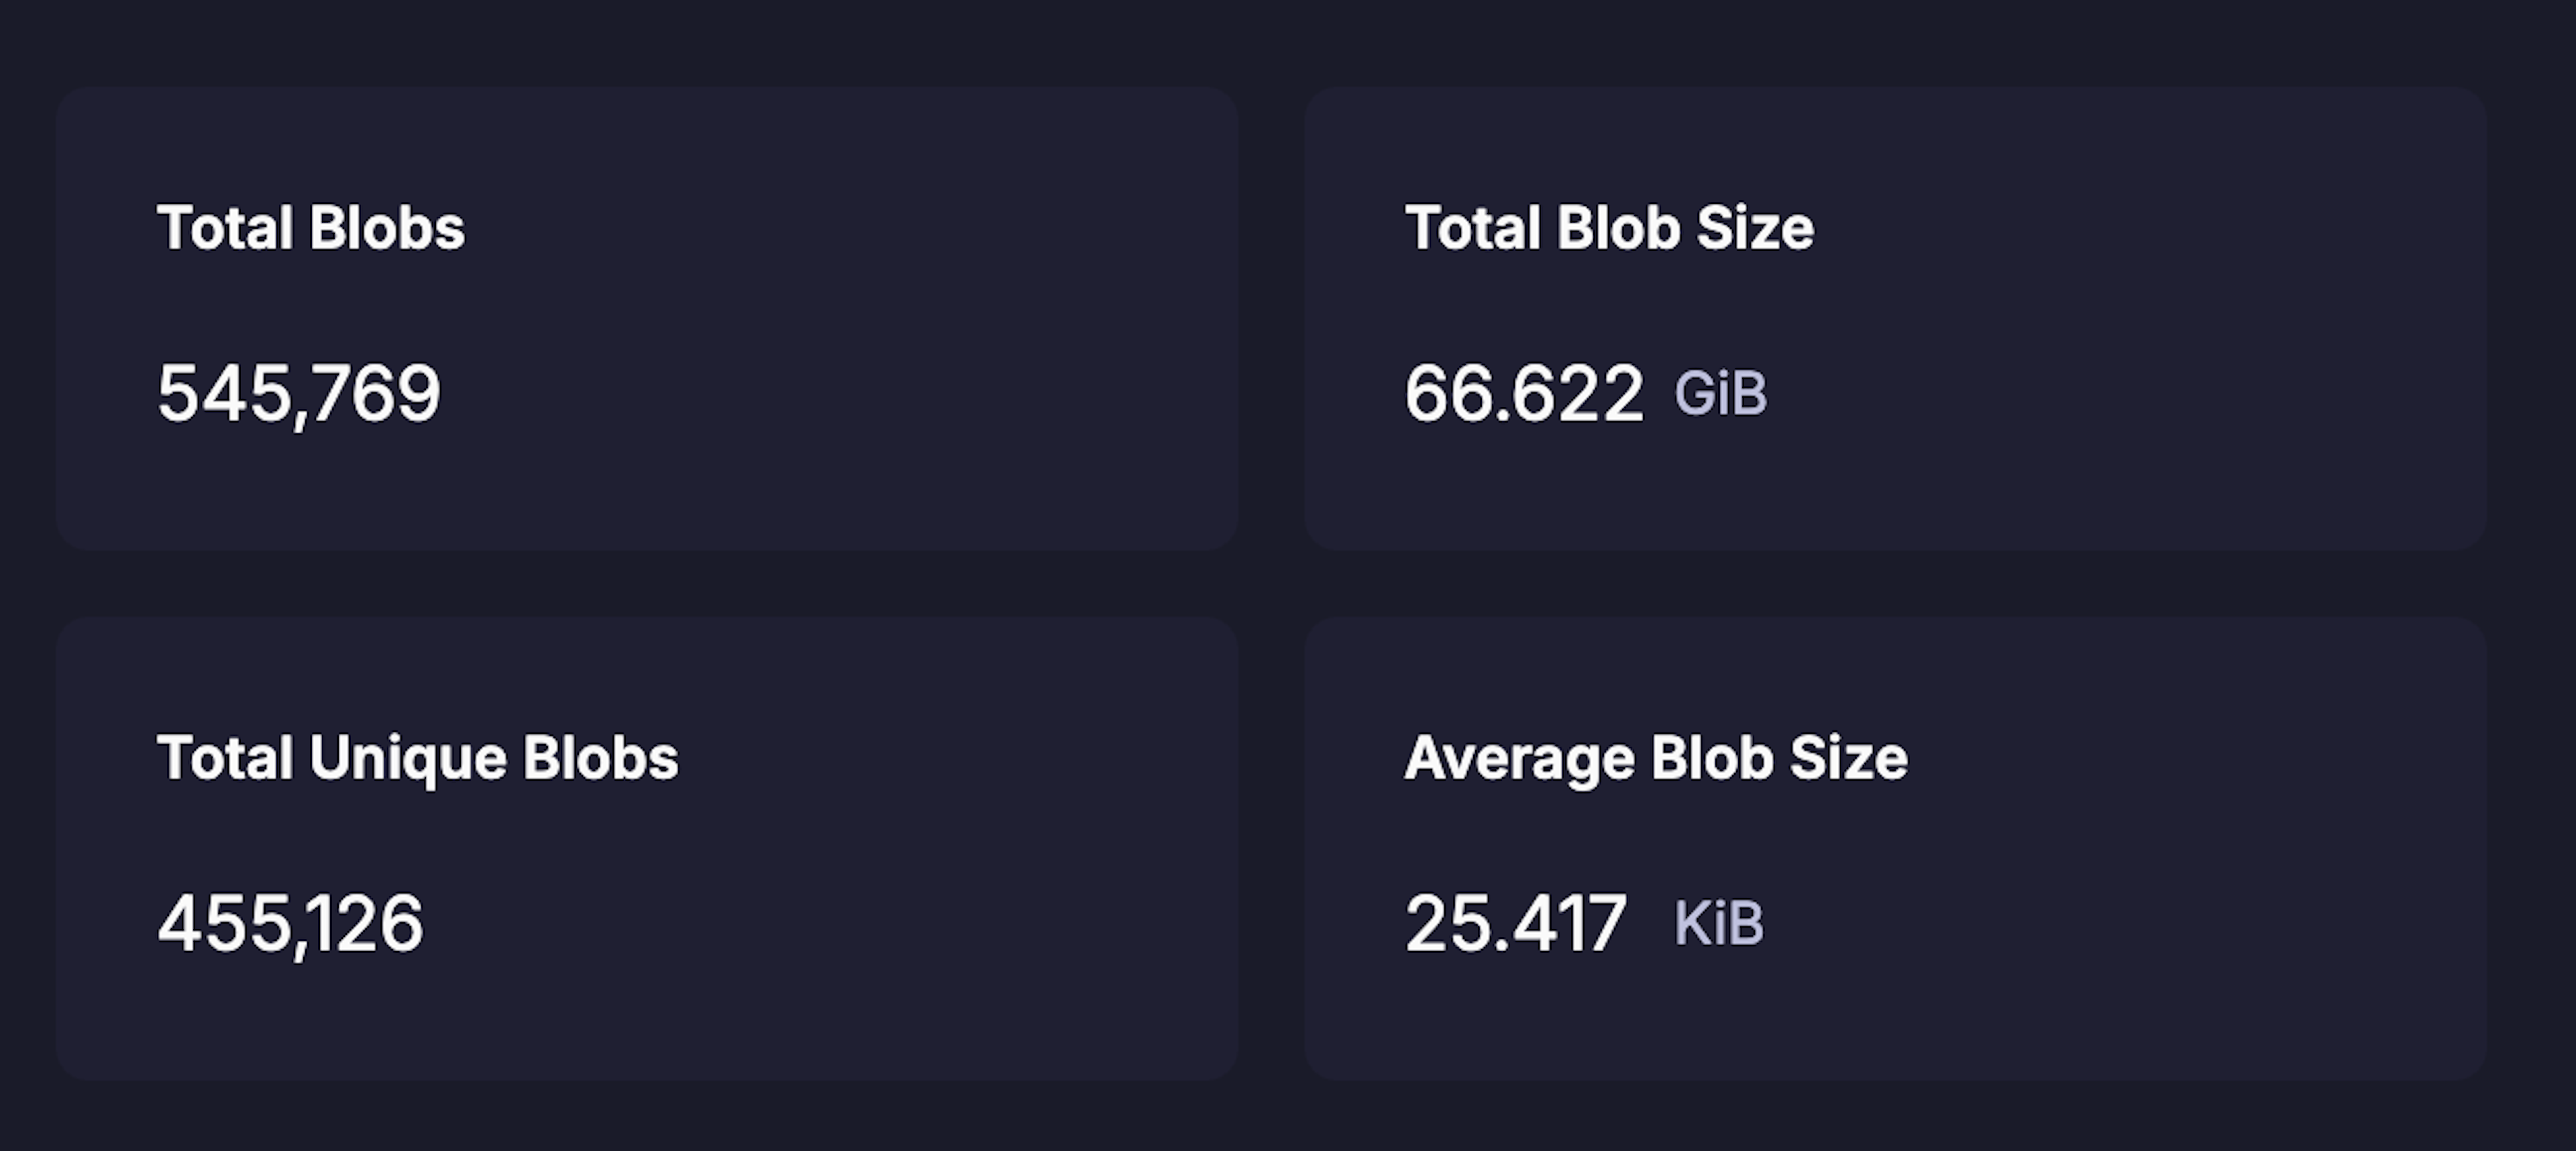 Average blob size on Blobscan is 25KB